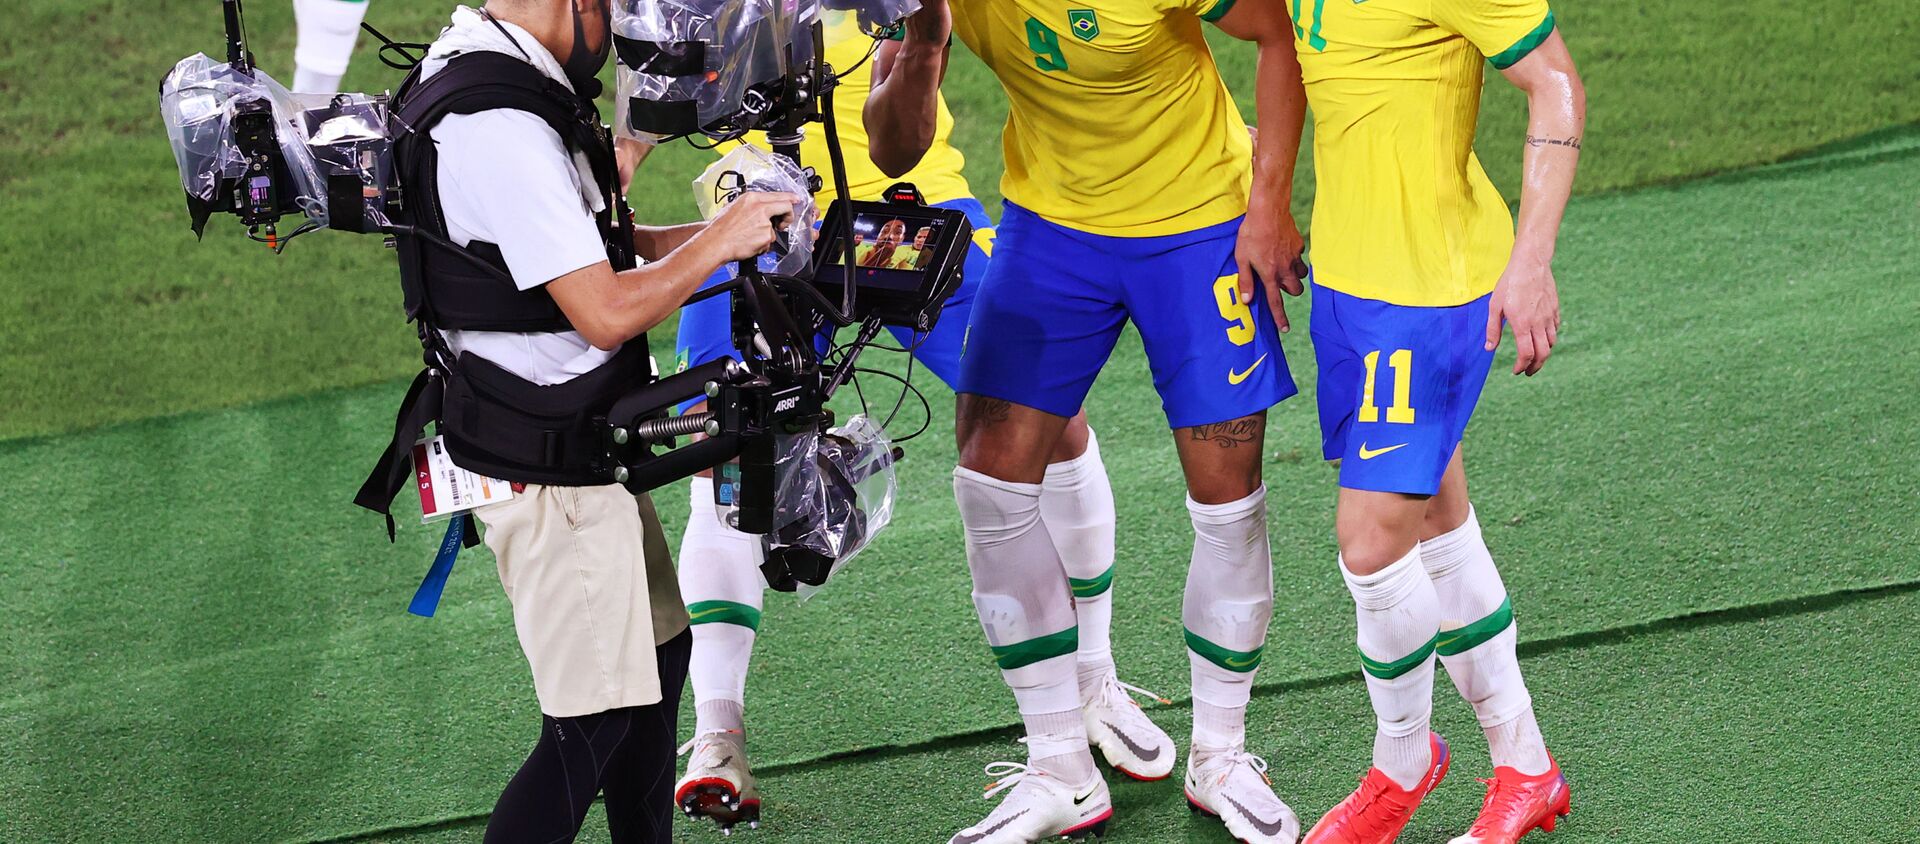 Matheus Cunha comemora seu primeiro gol nos acréscimos do segundo tempo com outros jogadores, Olimpíadas Tóquio 2020, 7 de agosto de 2021 - اسپوتنیک افغانستان  , 1920, 06.09.2021